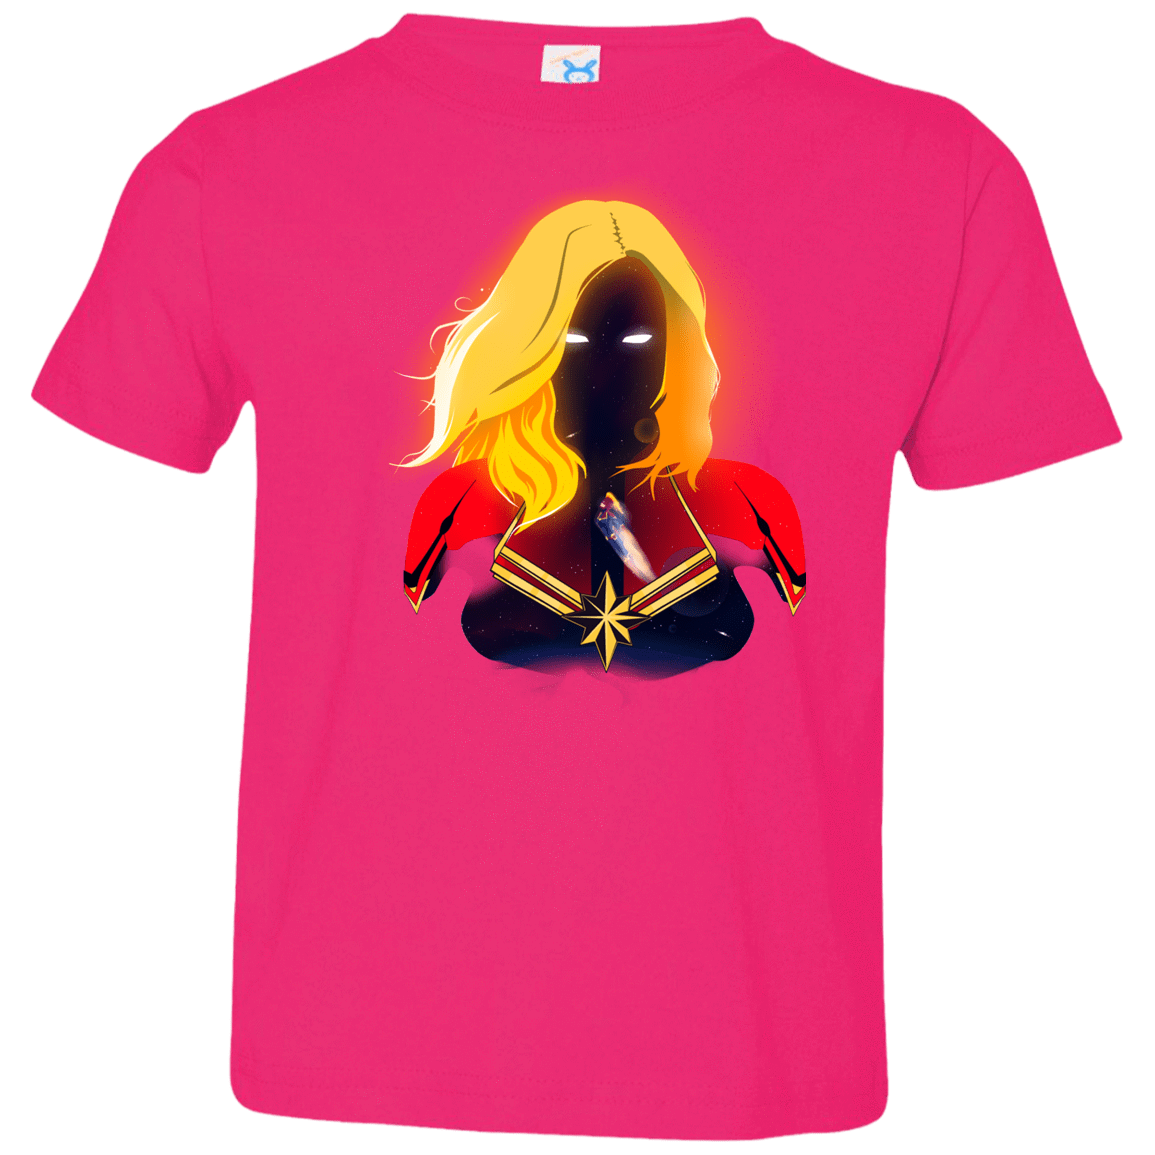 T-Shirts Hot Pink / 2T M A R V E L Toddler Premium T-Shirt